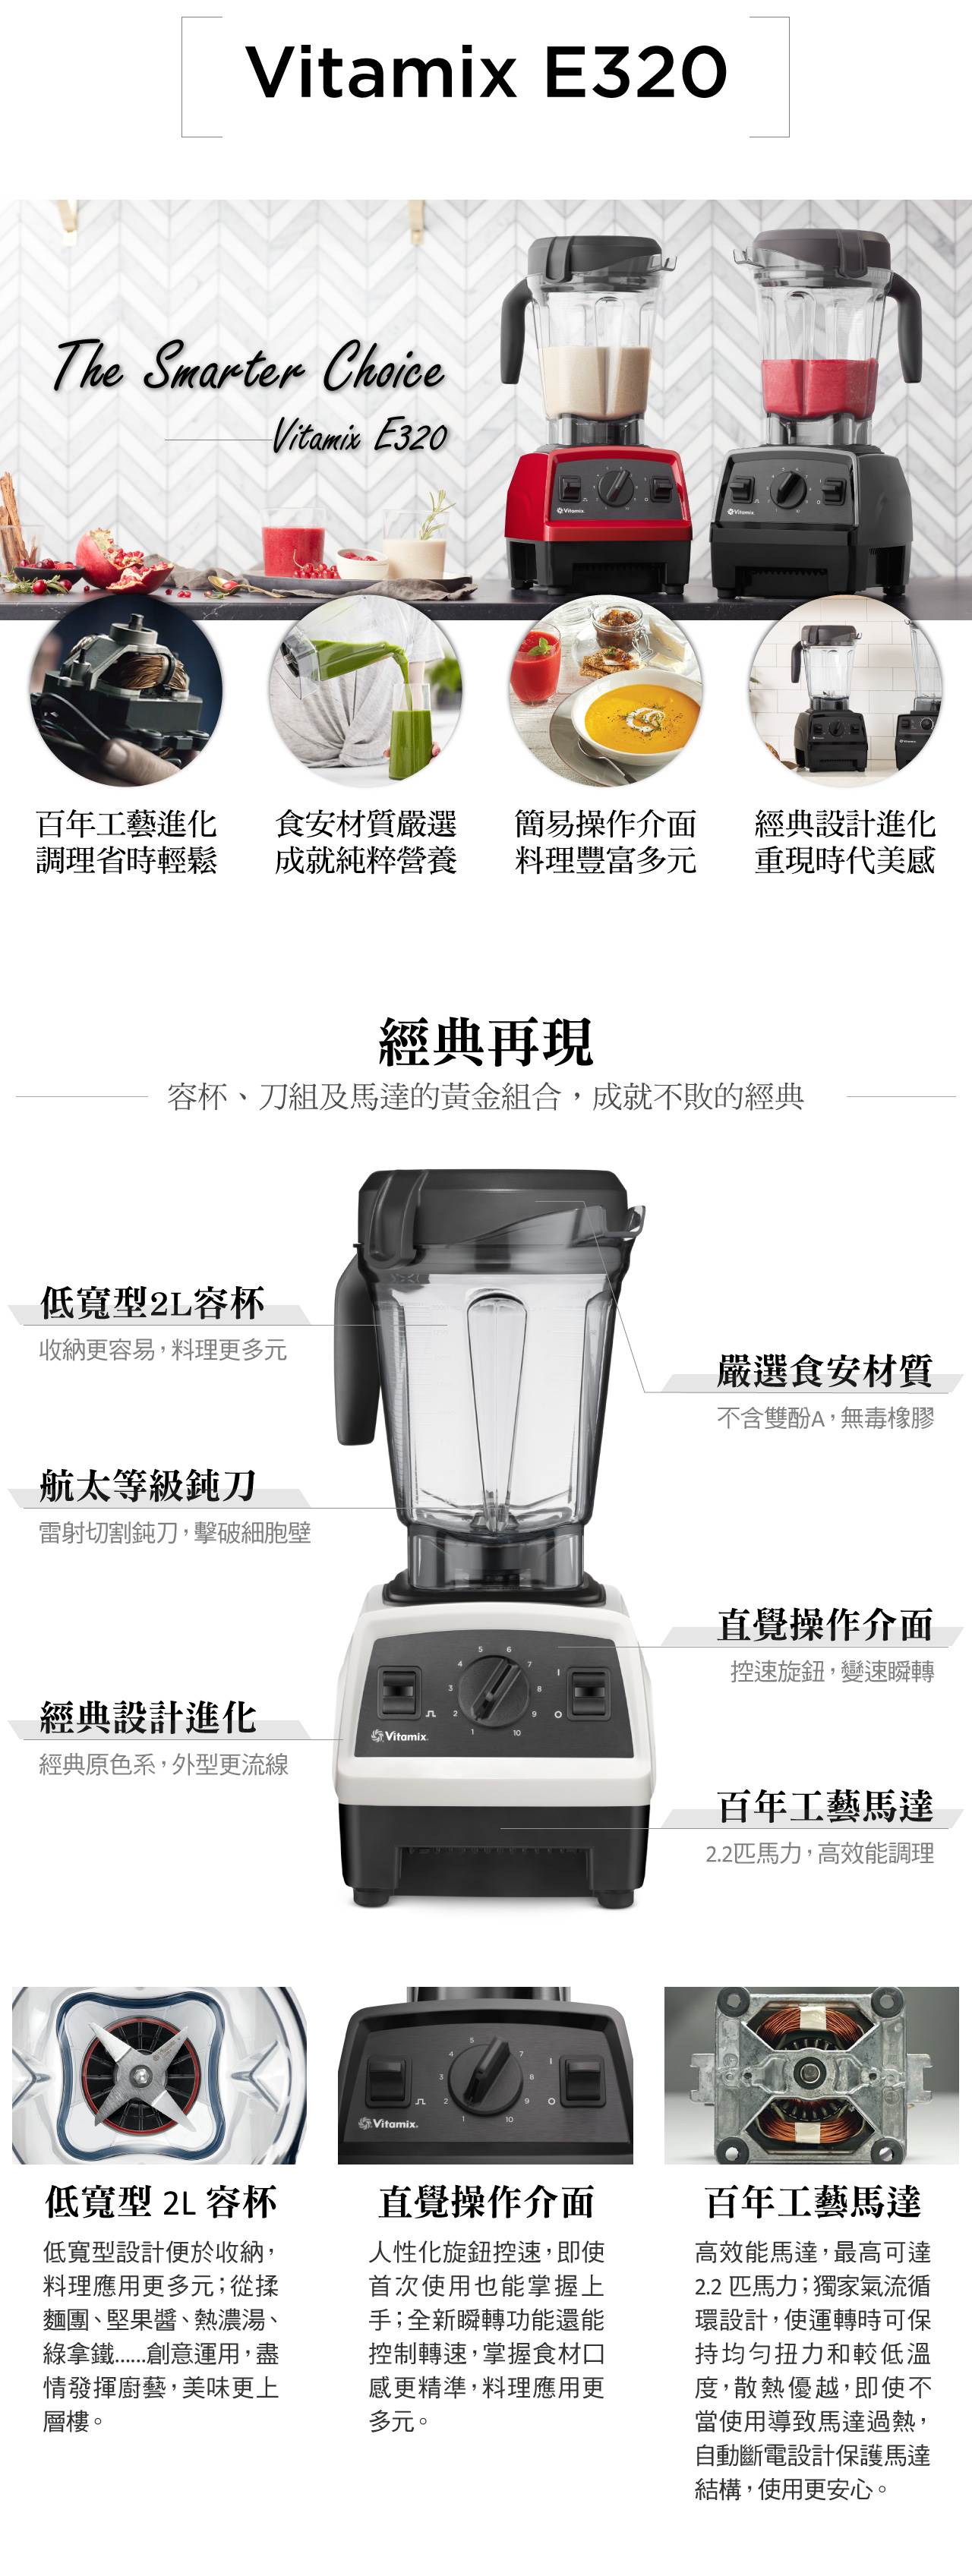 Vitamix-E320調理機-產品特色與經典再現